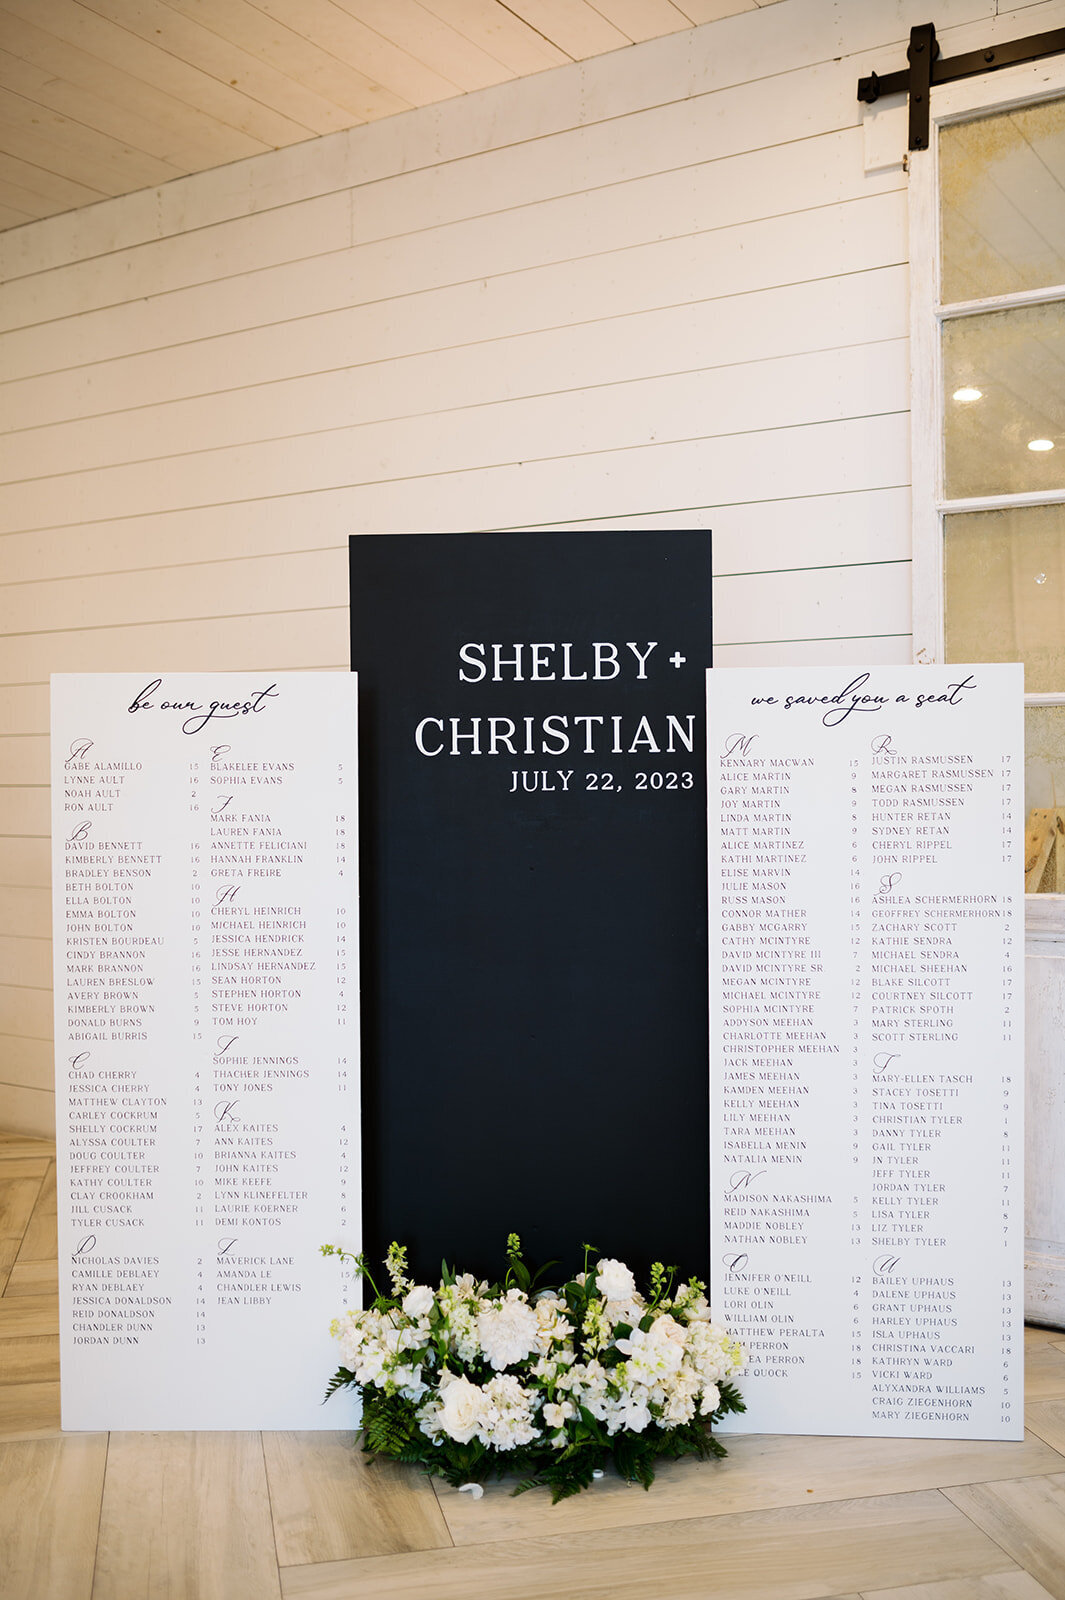 The Nest at Ruth Farms - Ponder Texas - Shelby + Christian - Reception Details - Stephanie Michelle Photography - _stephaniemichellephotog-2